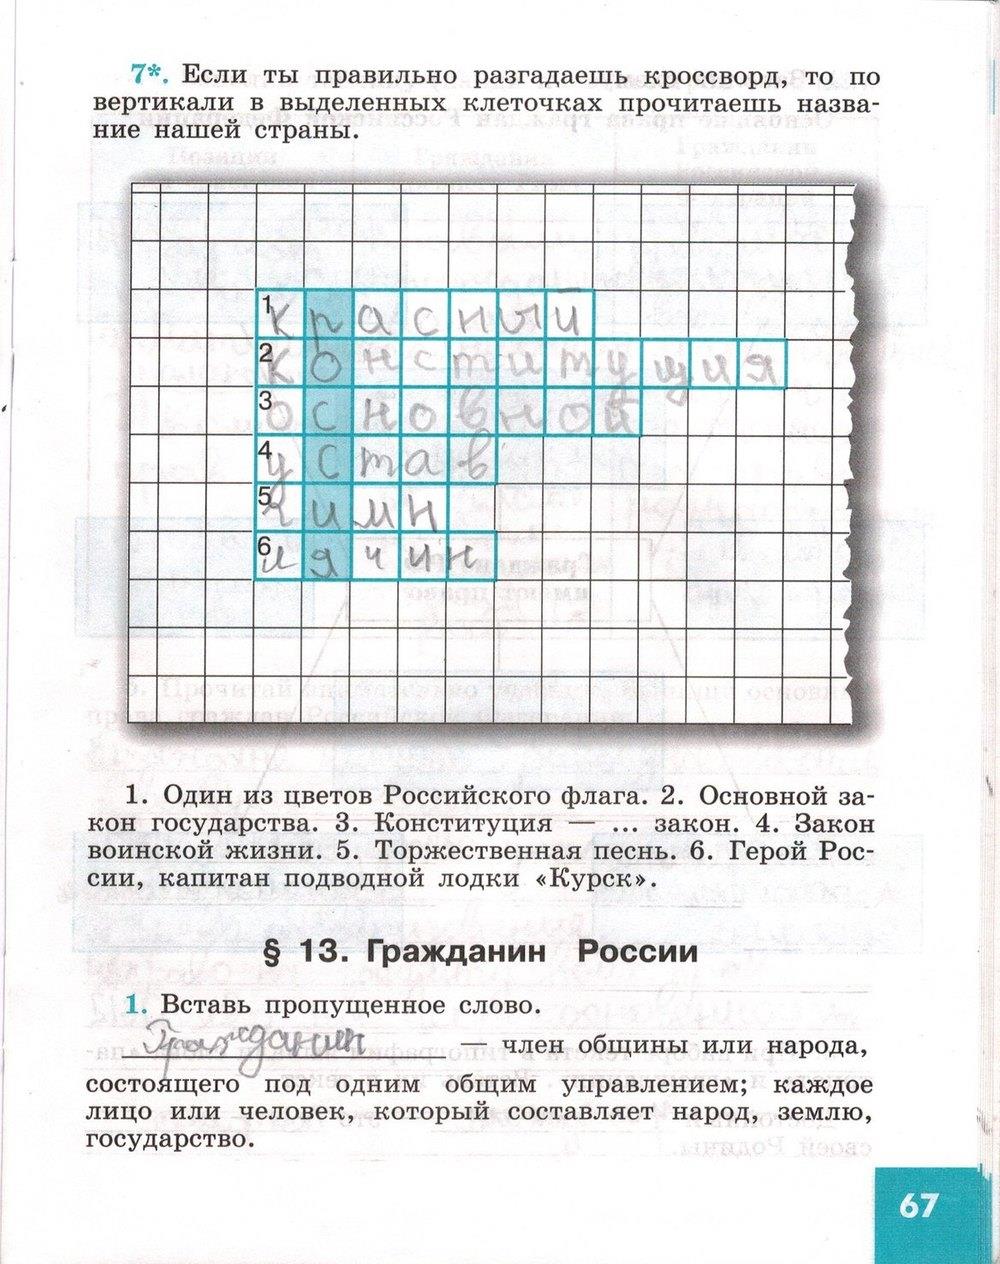 гдз 5 класс рабочая тетрадь страница 67 обществознание Иванова, Хотеенкова